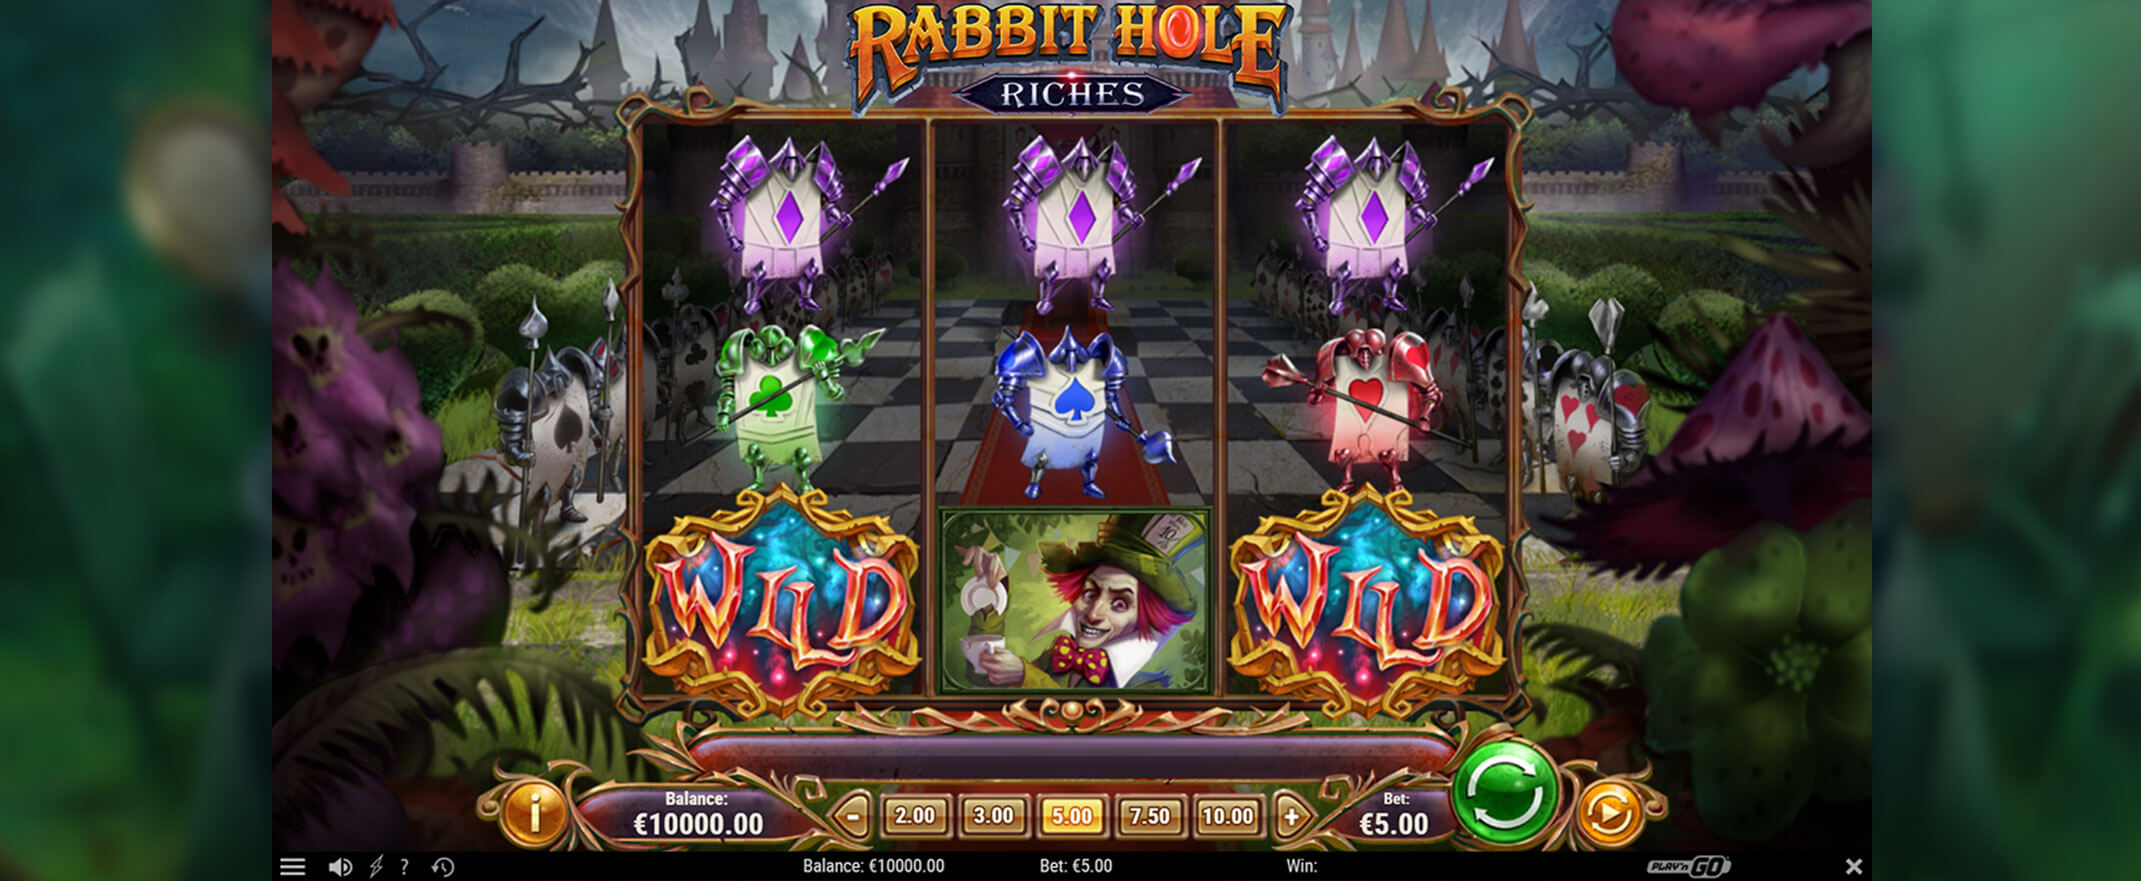 Rabbit Hole Riches slot screenshot